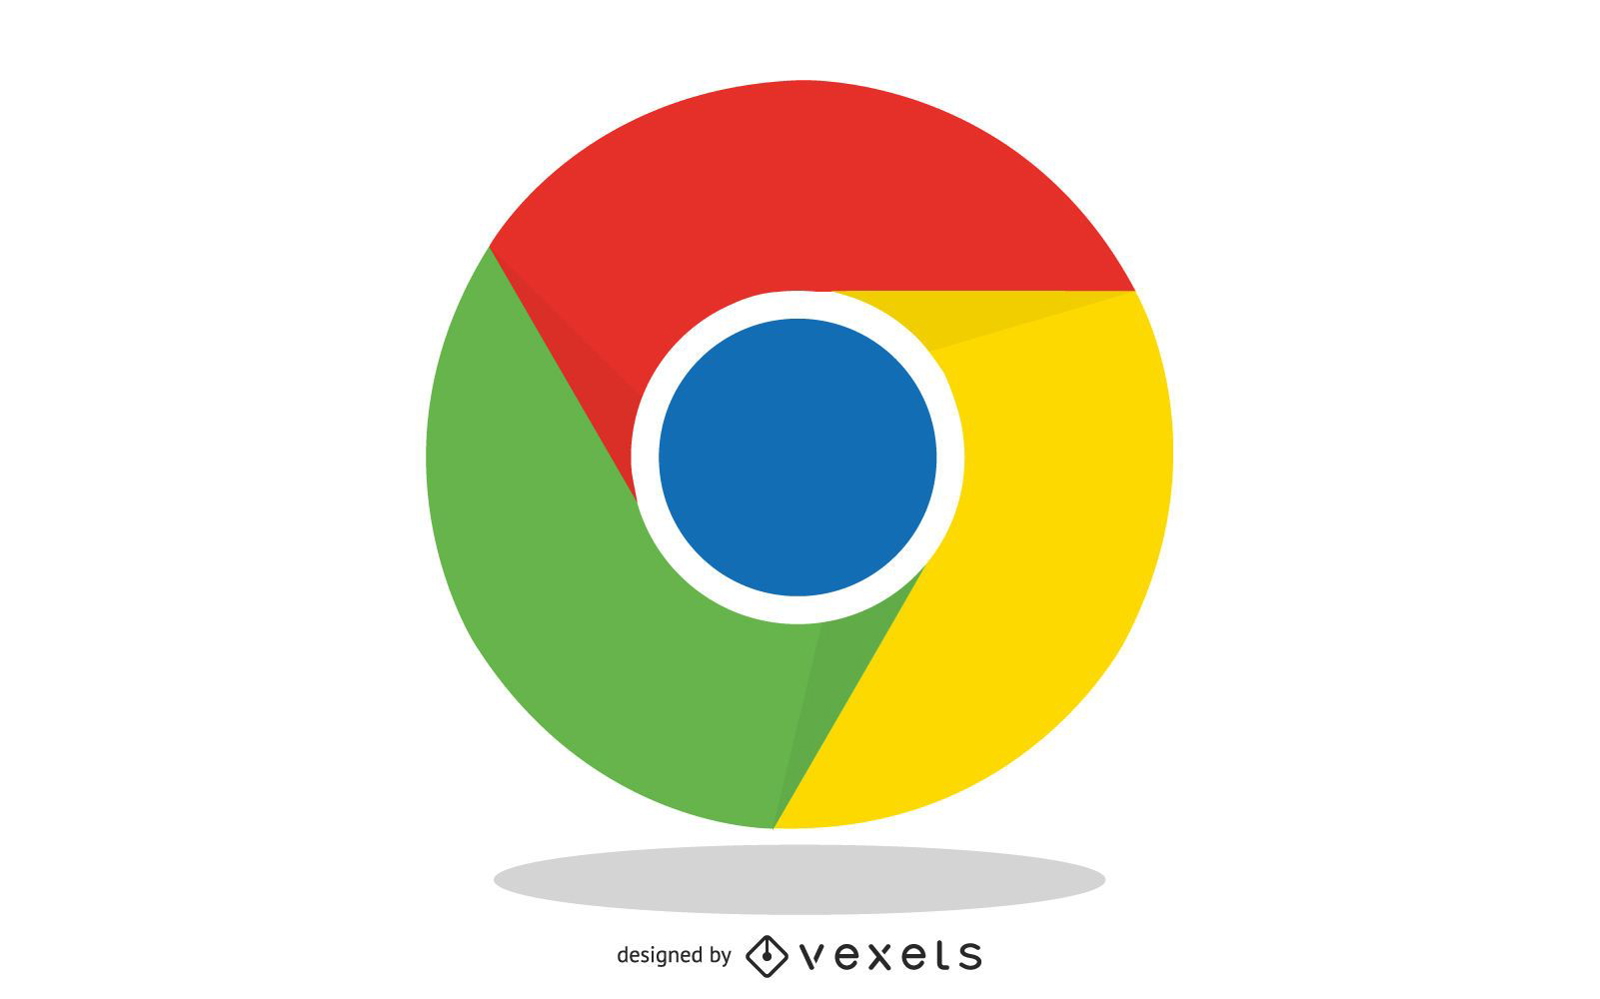 Free Vector Cute Google Chrome Icon